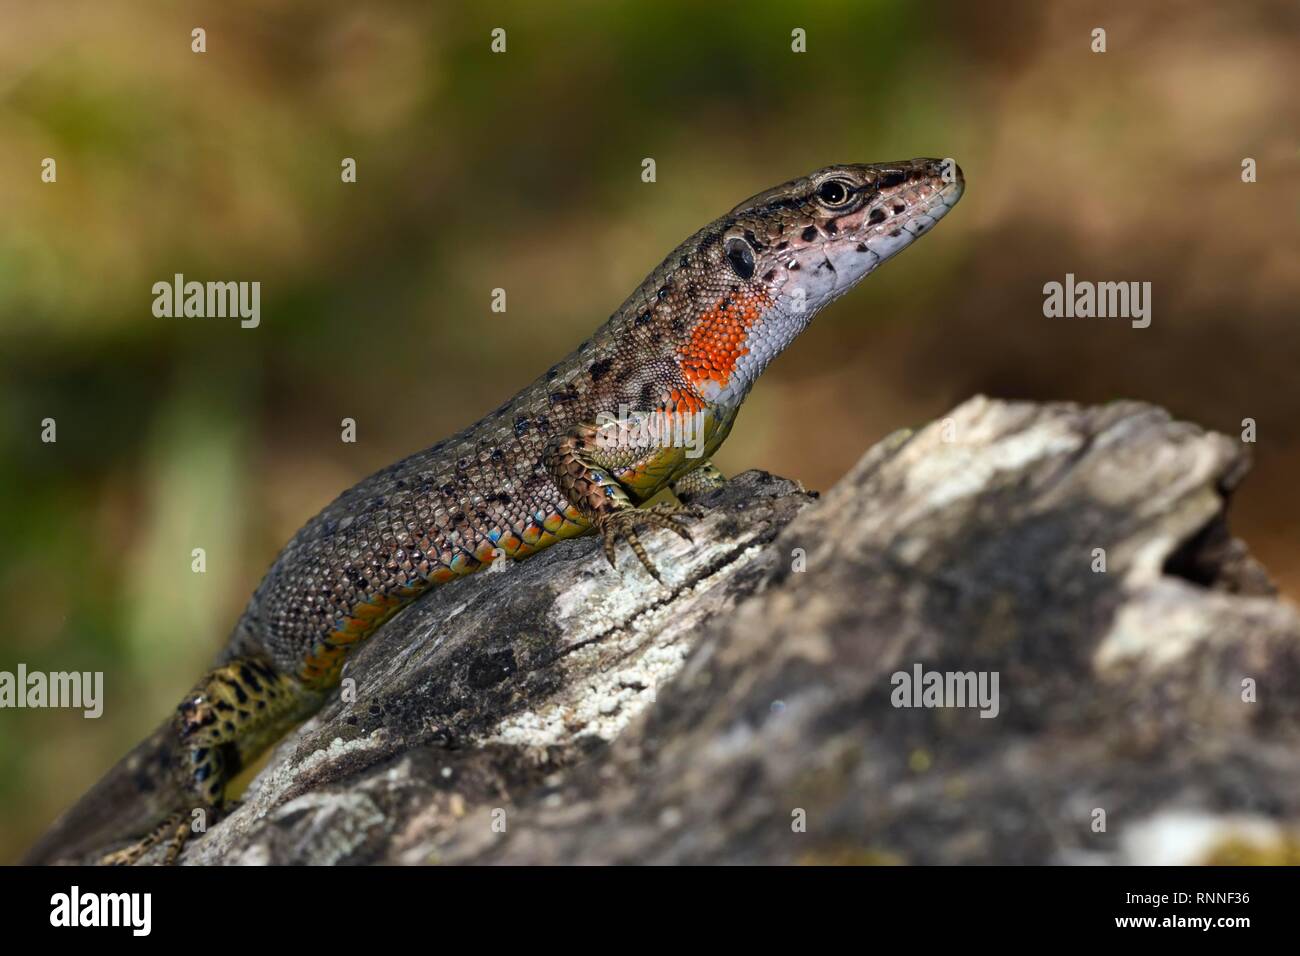 Blue-throated keeled lizard (Algyroides nigropunctatus), females, Corfu, Greece Stock Photo